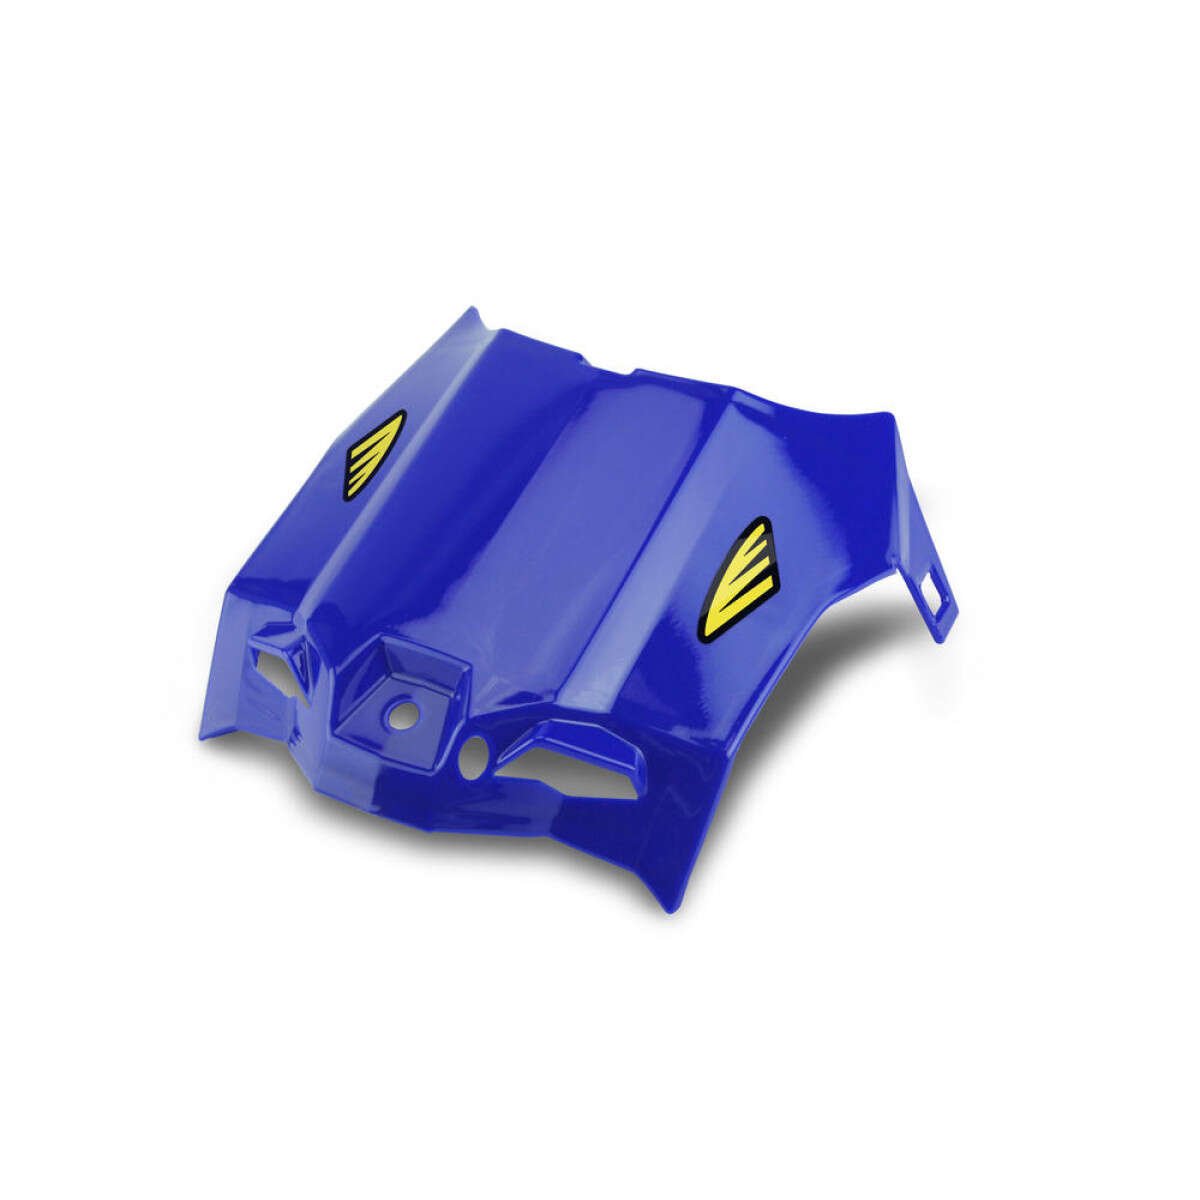 Cycra Luftfilterkastenabdeckung für Kühlerspoiler Powerflow Yamaha YZ-F 250/450 14-17, Blau